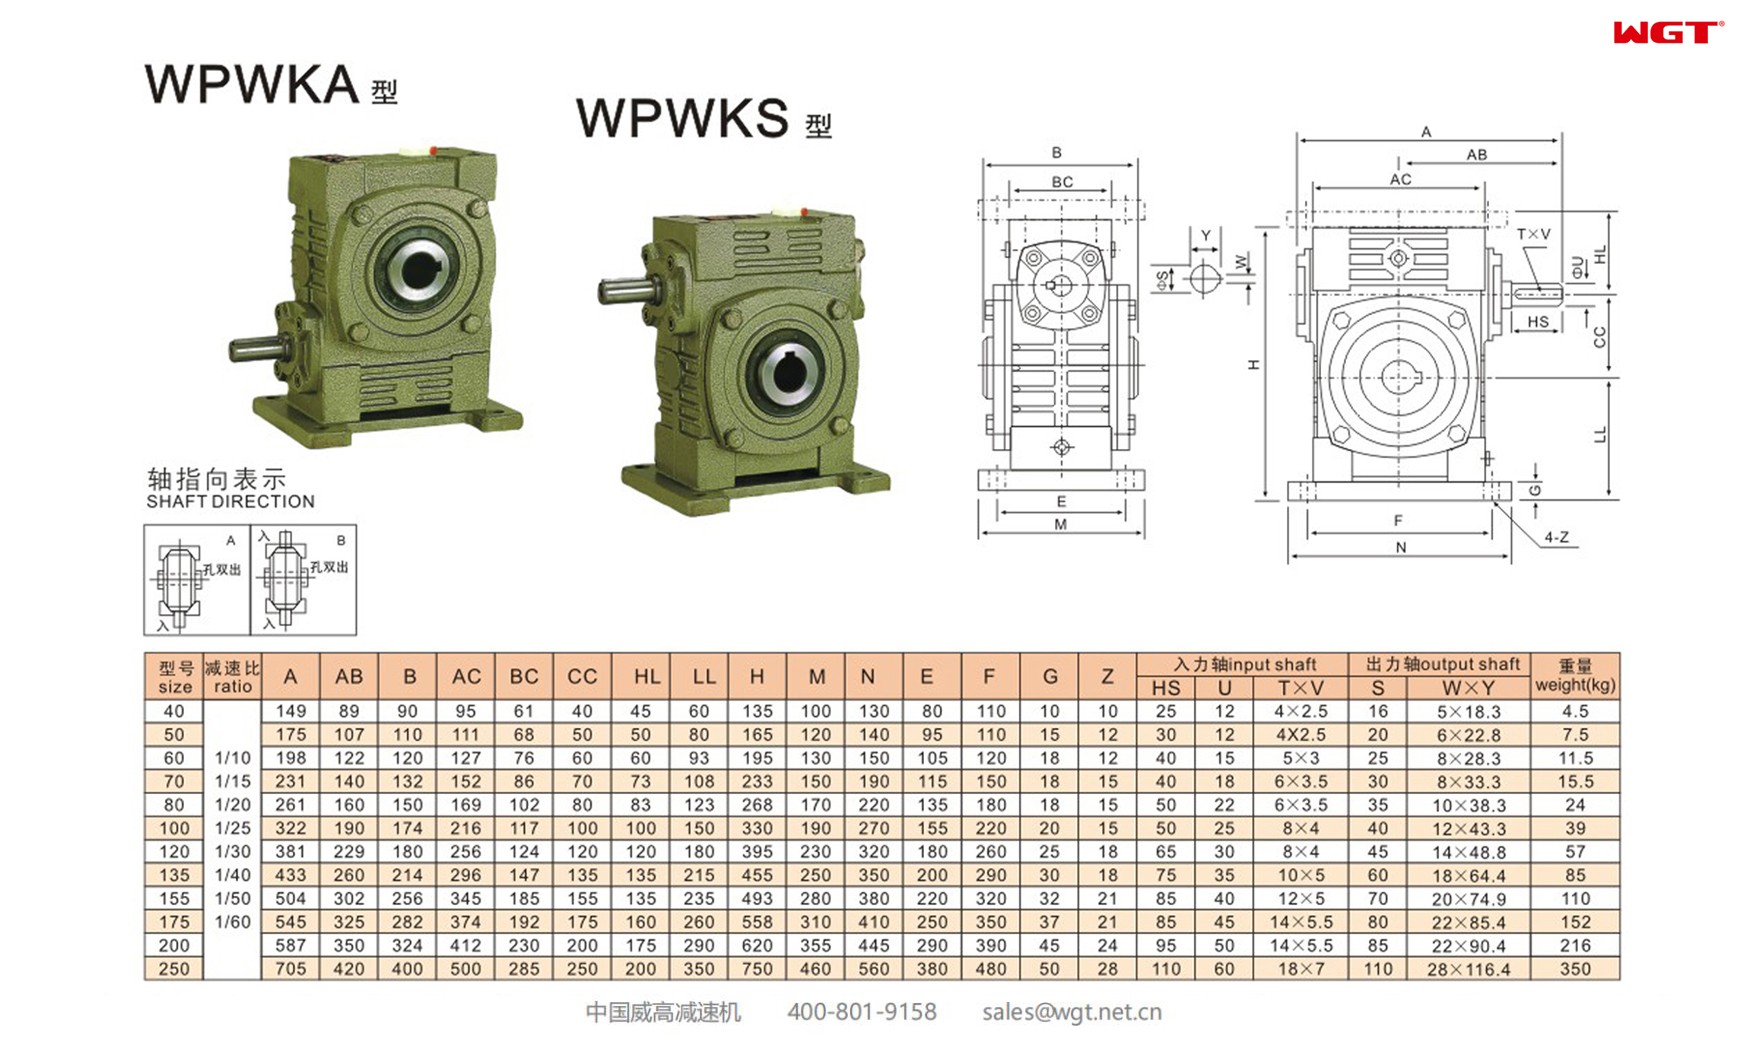 WPWKS60 worm gear reducer universal speed reducer 